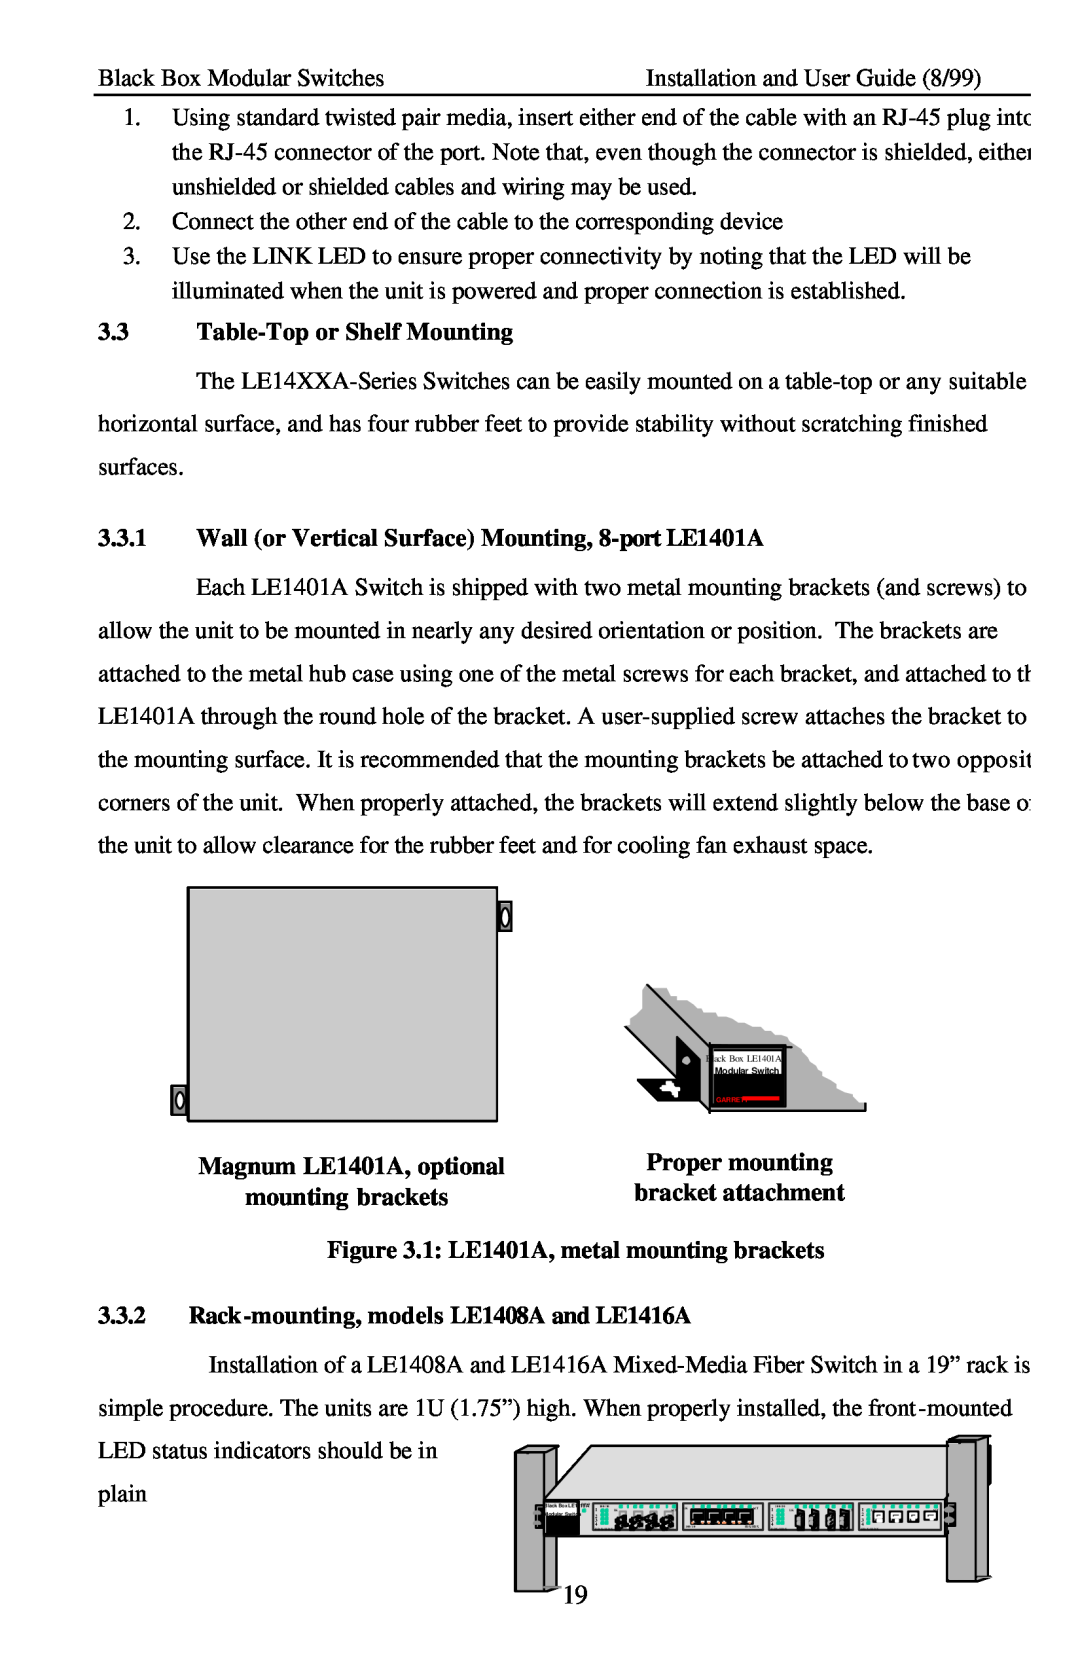 Black Box LE14XXA manual 3.3Table-Topor Shelf Mounting, Proper mounting, Magnum LE1401A, optional, mounting brackets 